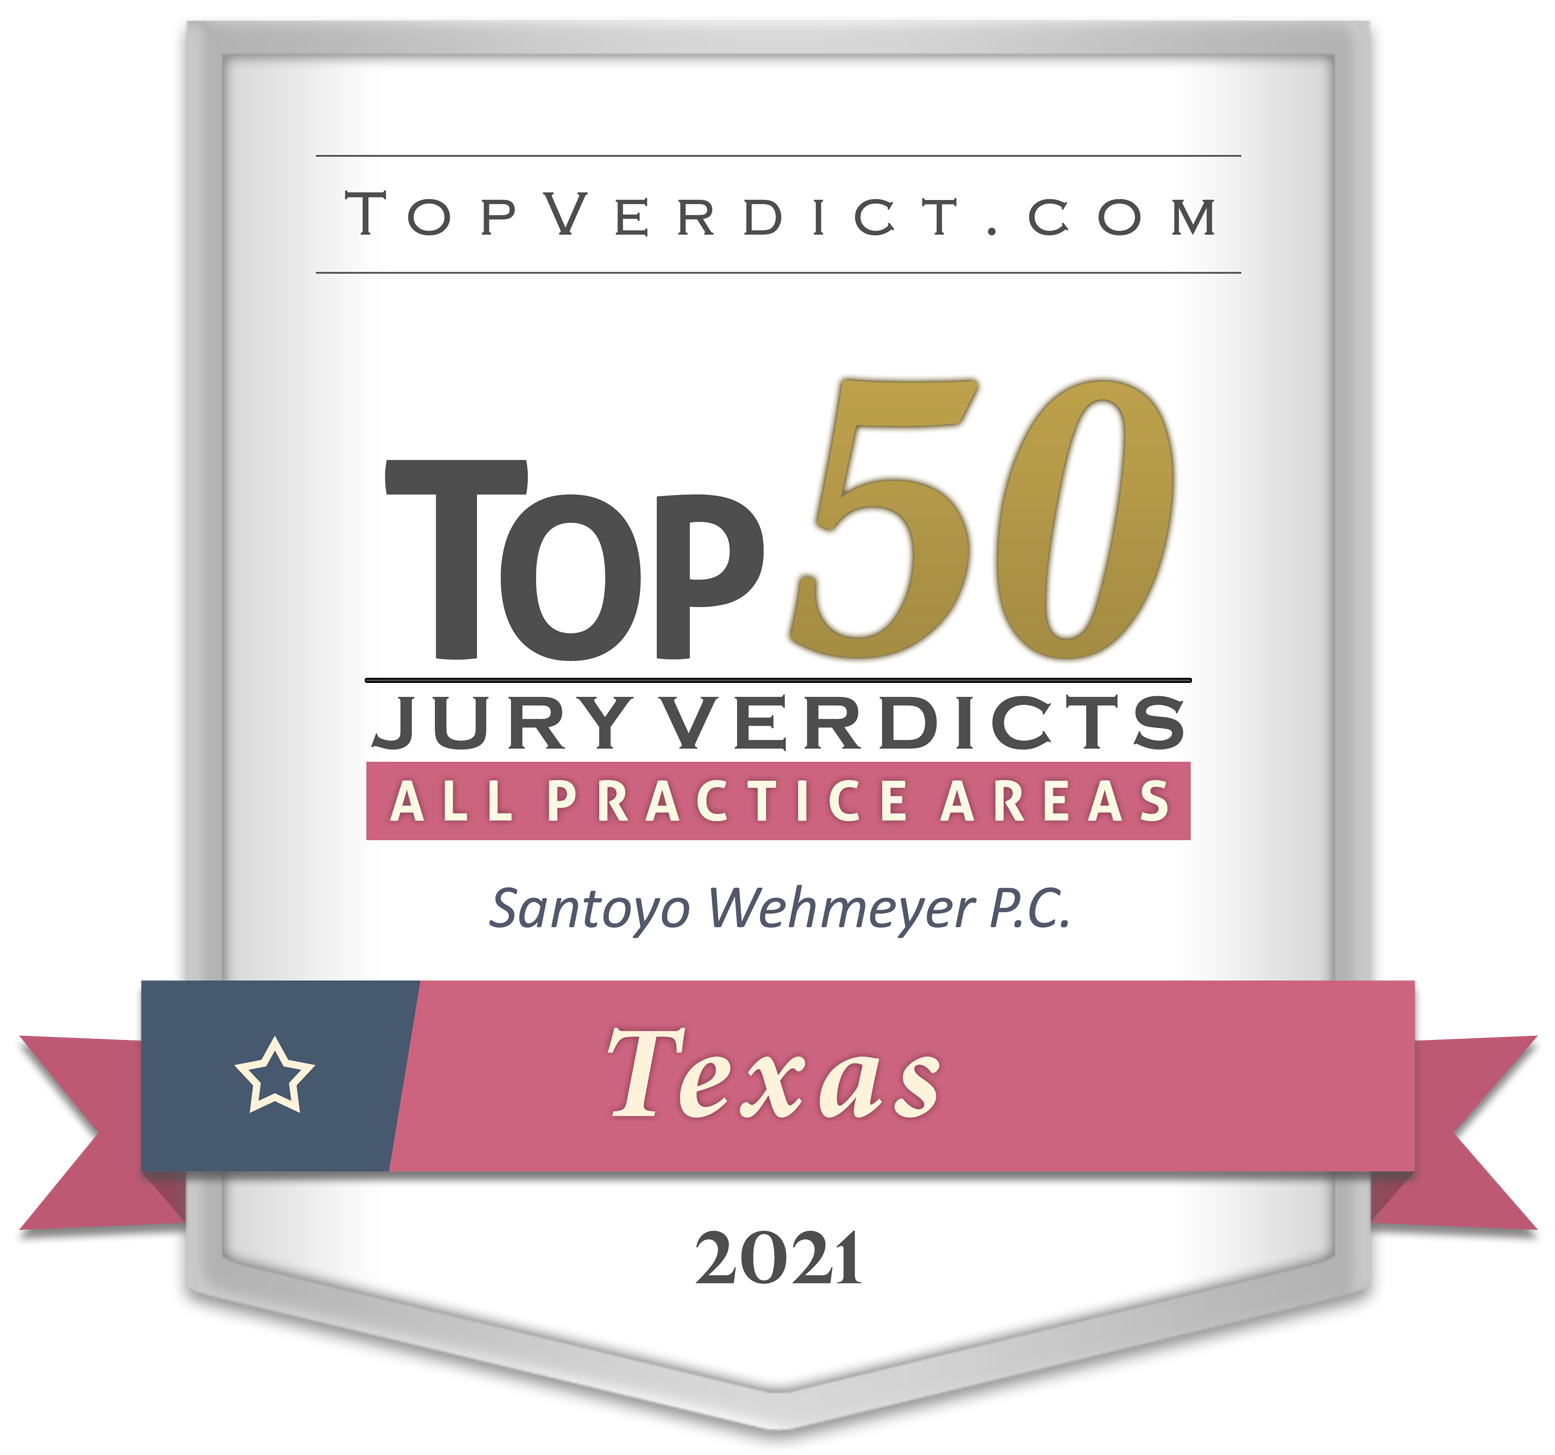 2021 Top 20 Verdicts